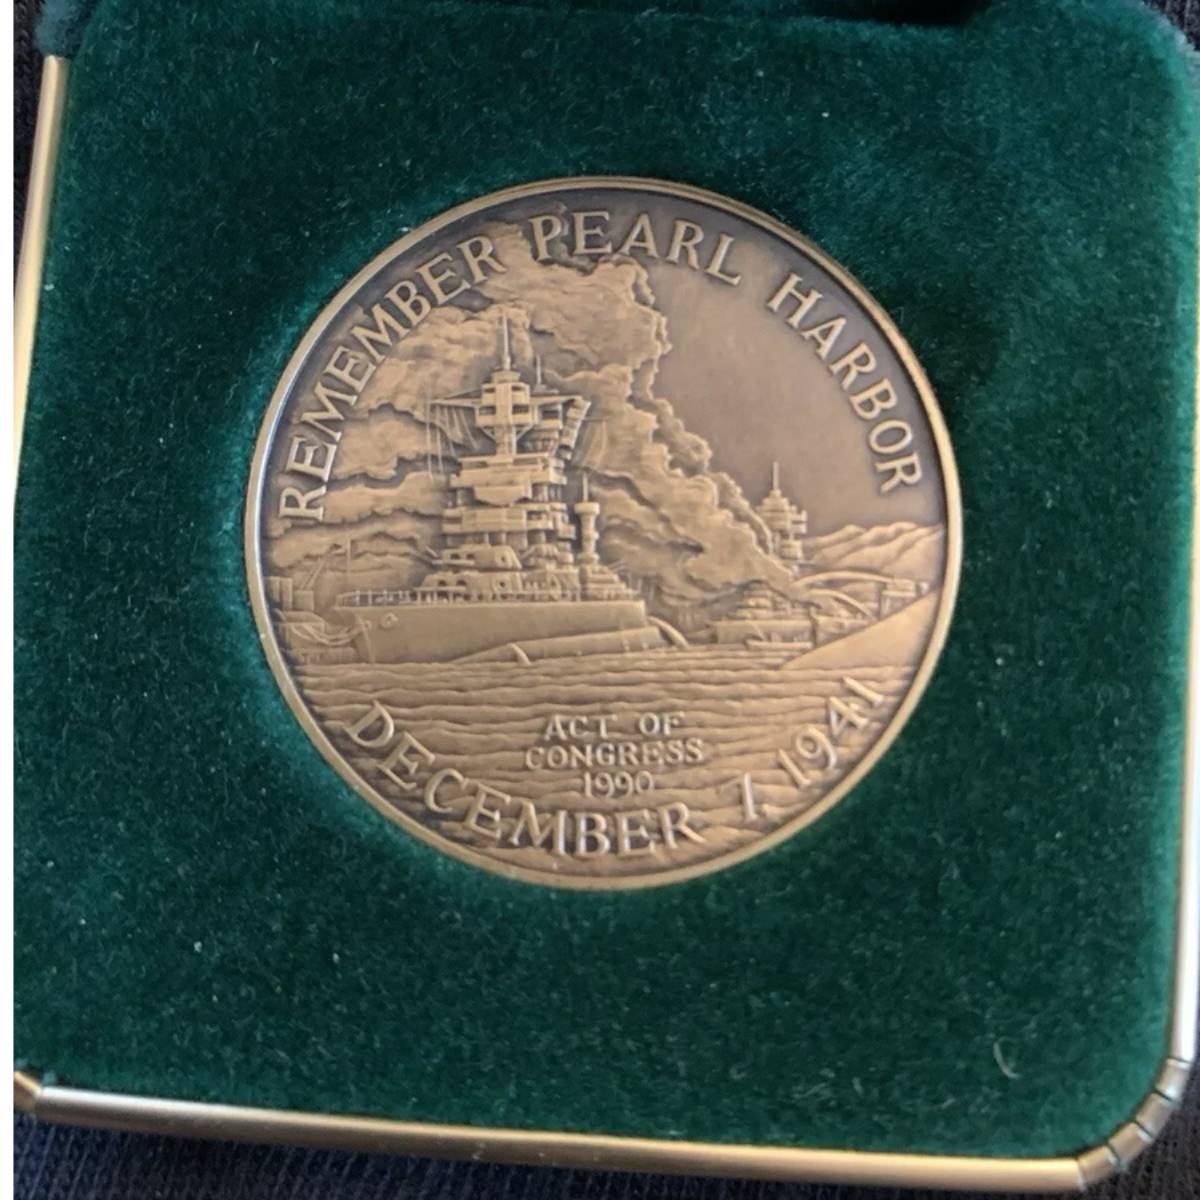 Pearl Harbor Medal Congress